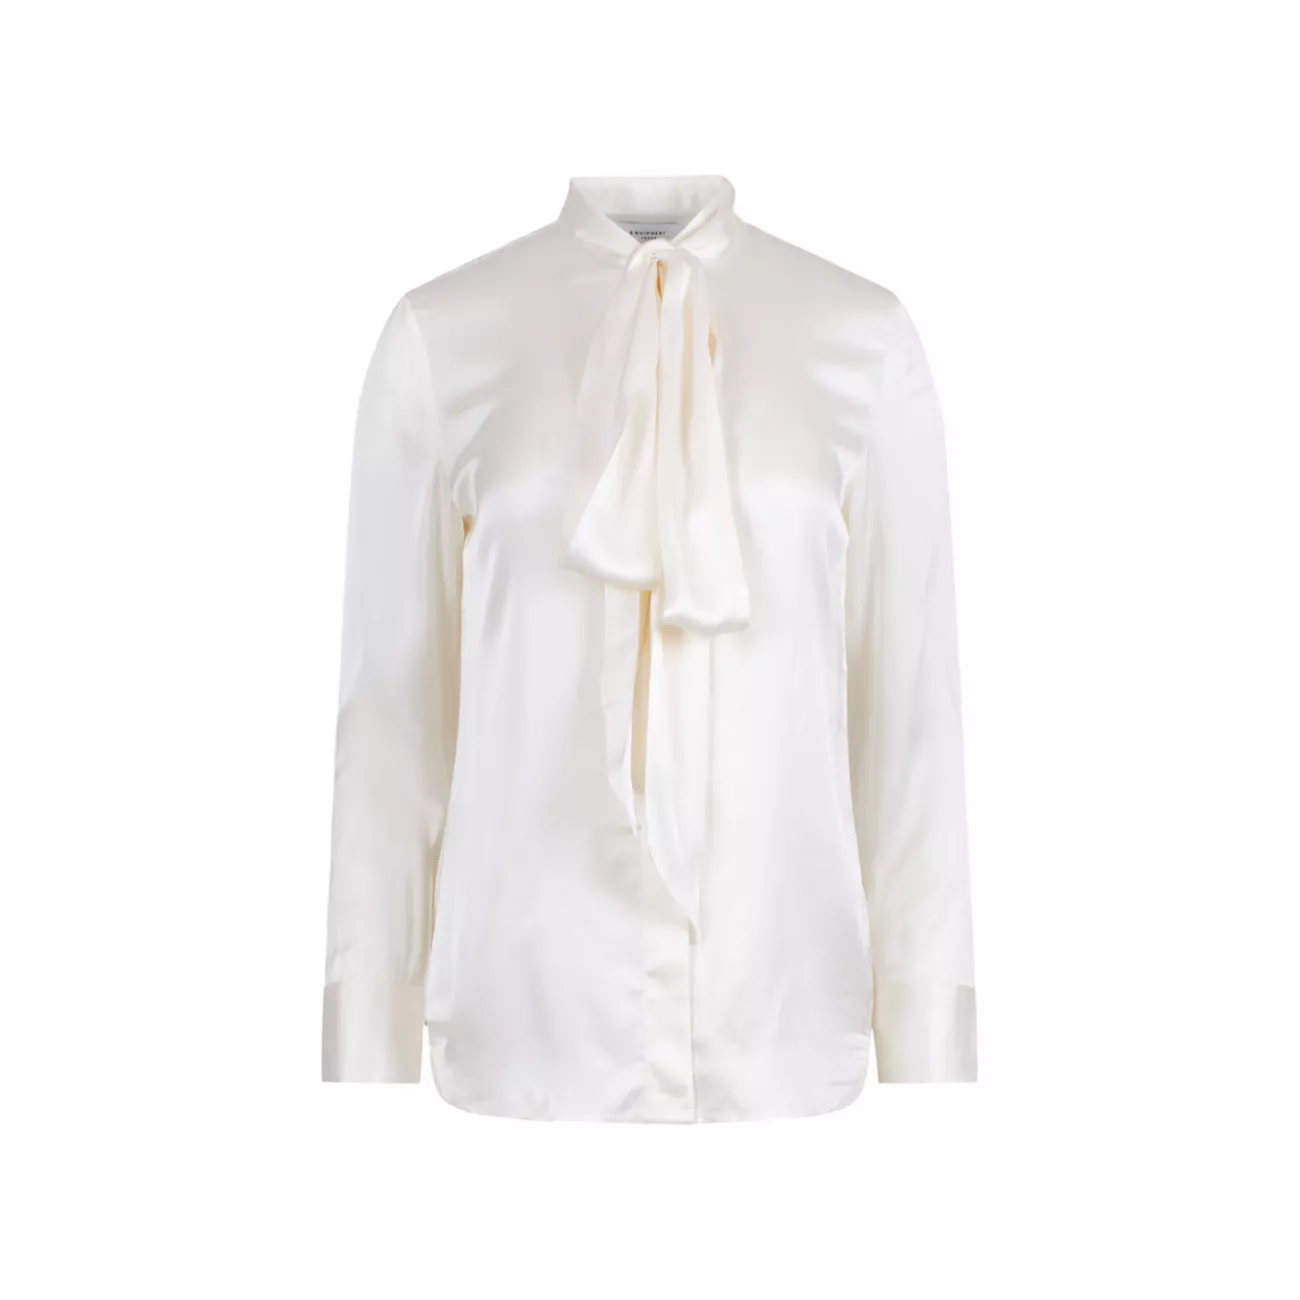 Атласная блузка Miki с завязками на воротнике EQUIPMENT